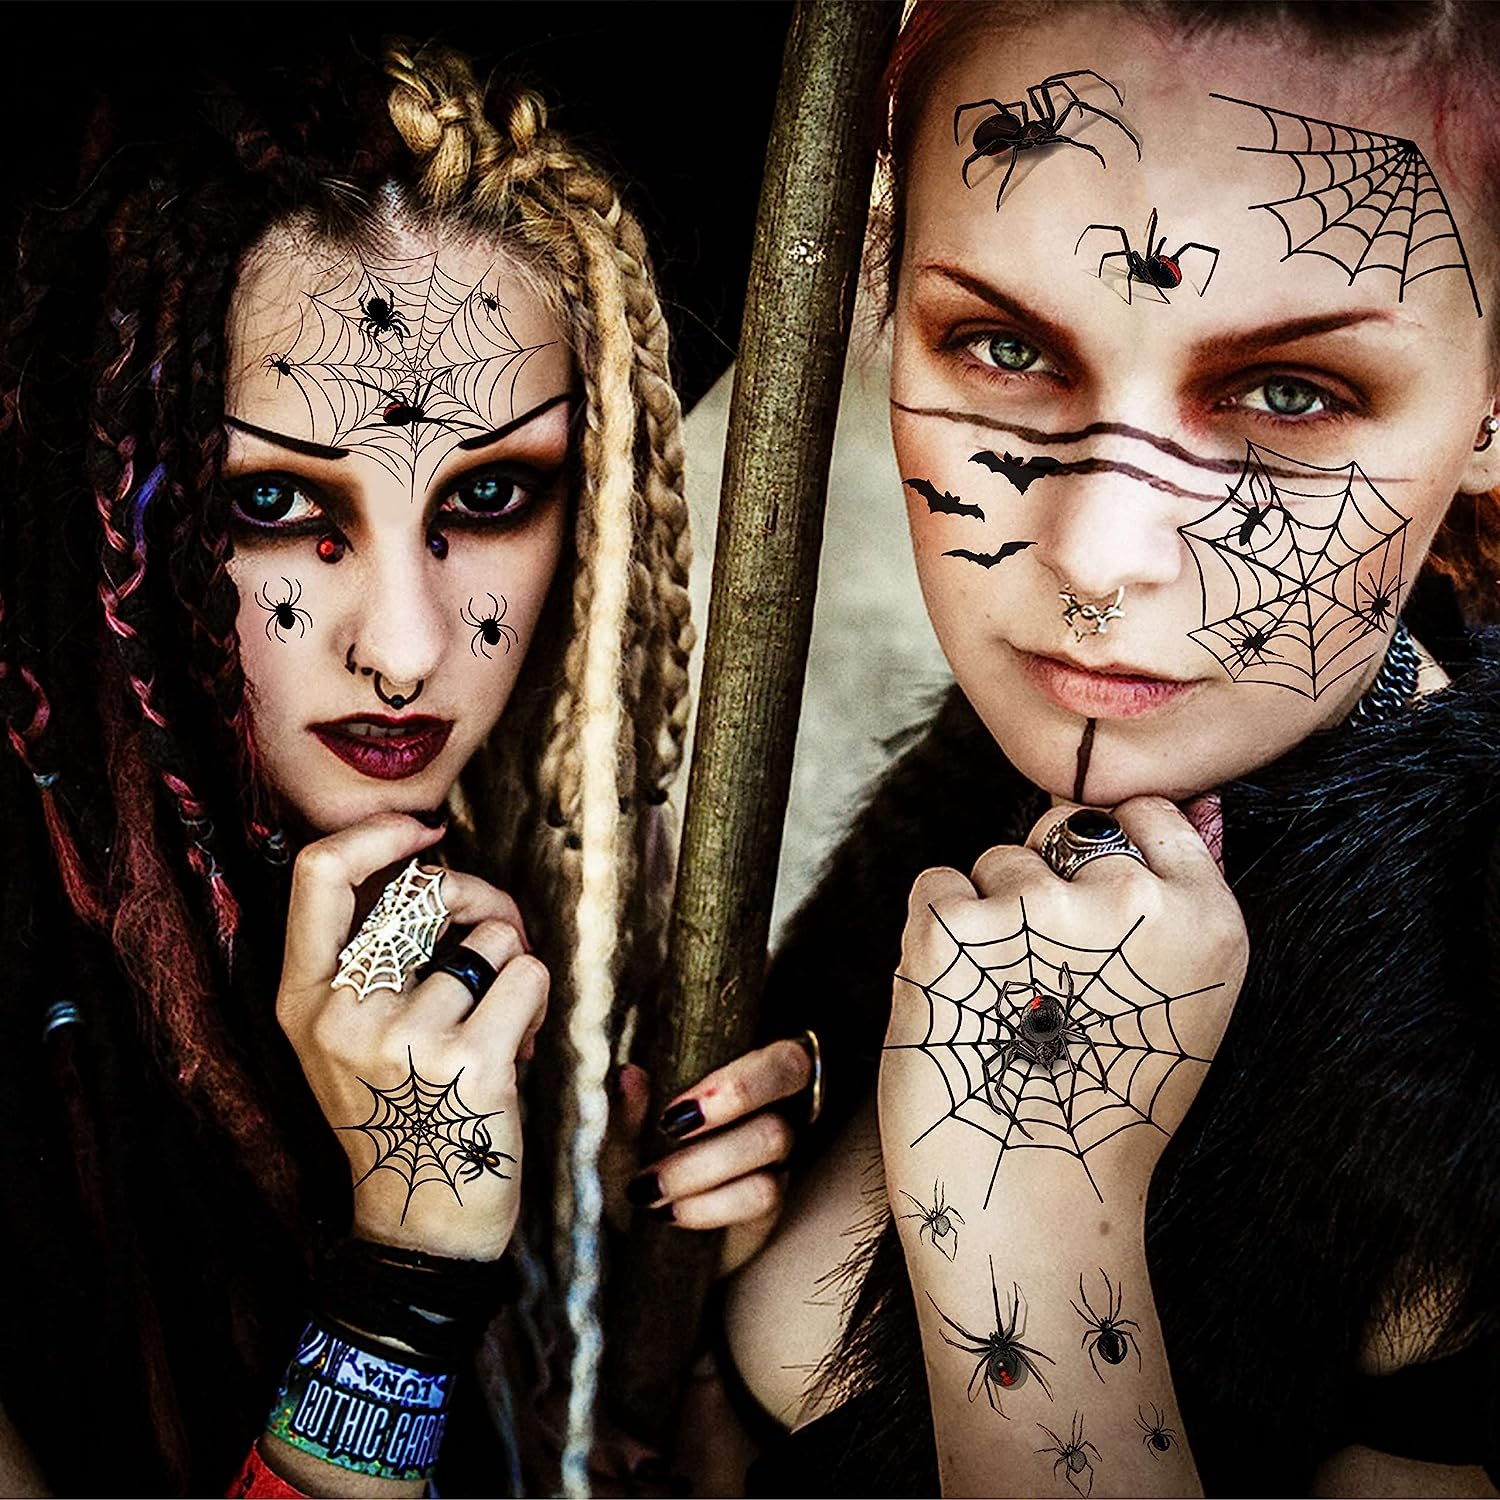 Womens Skinny Halloween Fancy Costume Skull Cat Spider Web Scary